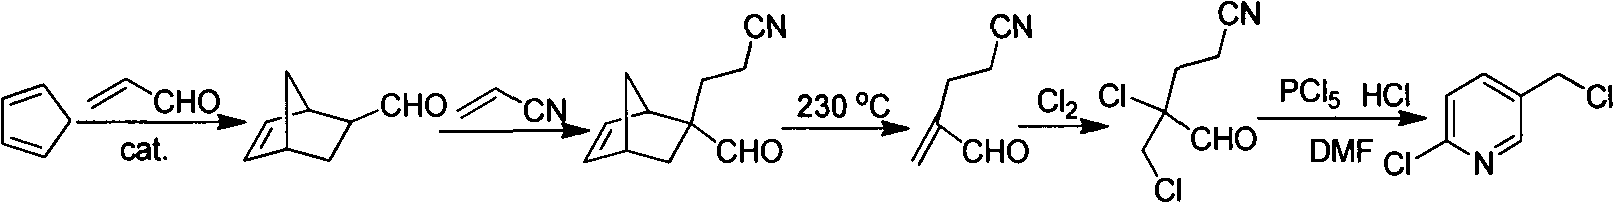 Improved 2-chlorine-5-chloromethyl pyridine synthesis process